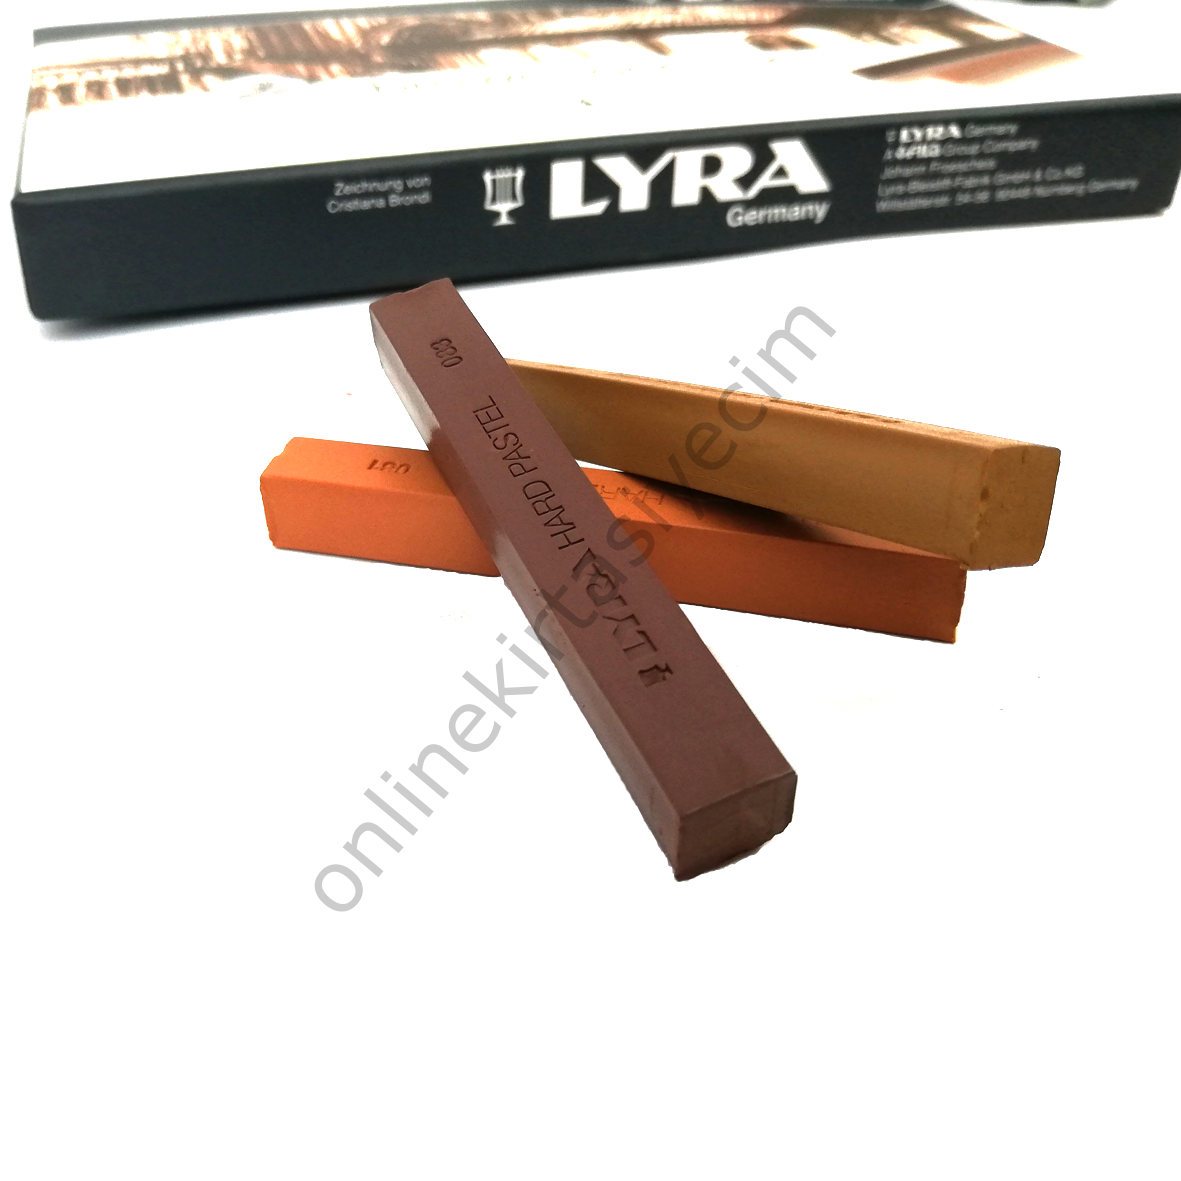 Lyra Polycrayons Toz Pastel Boya 24 Renk 5651240 Soft Pastel Boya Pastel Boya Setleri Lyra Indirimli